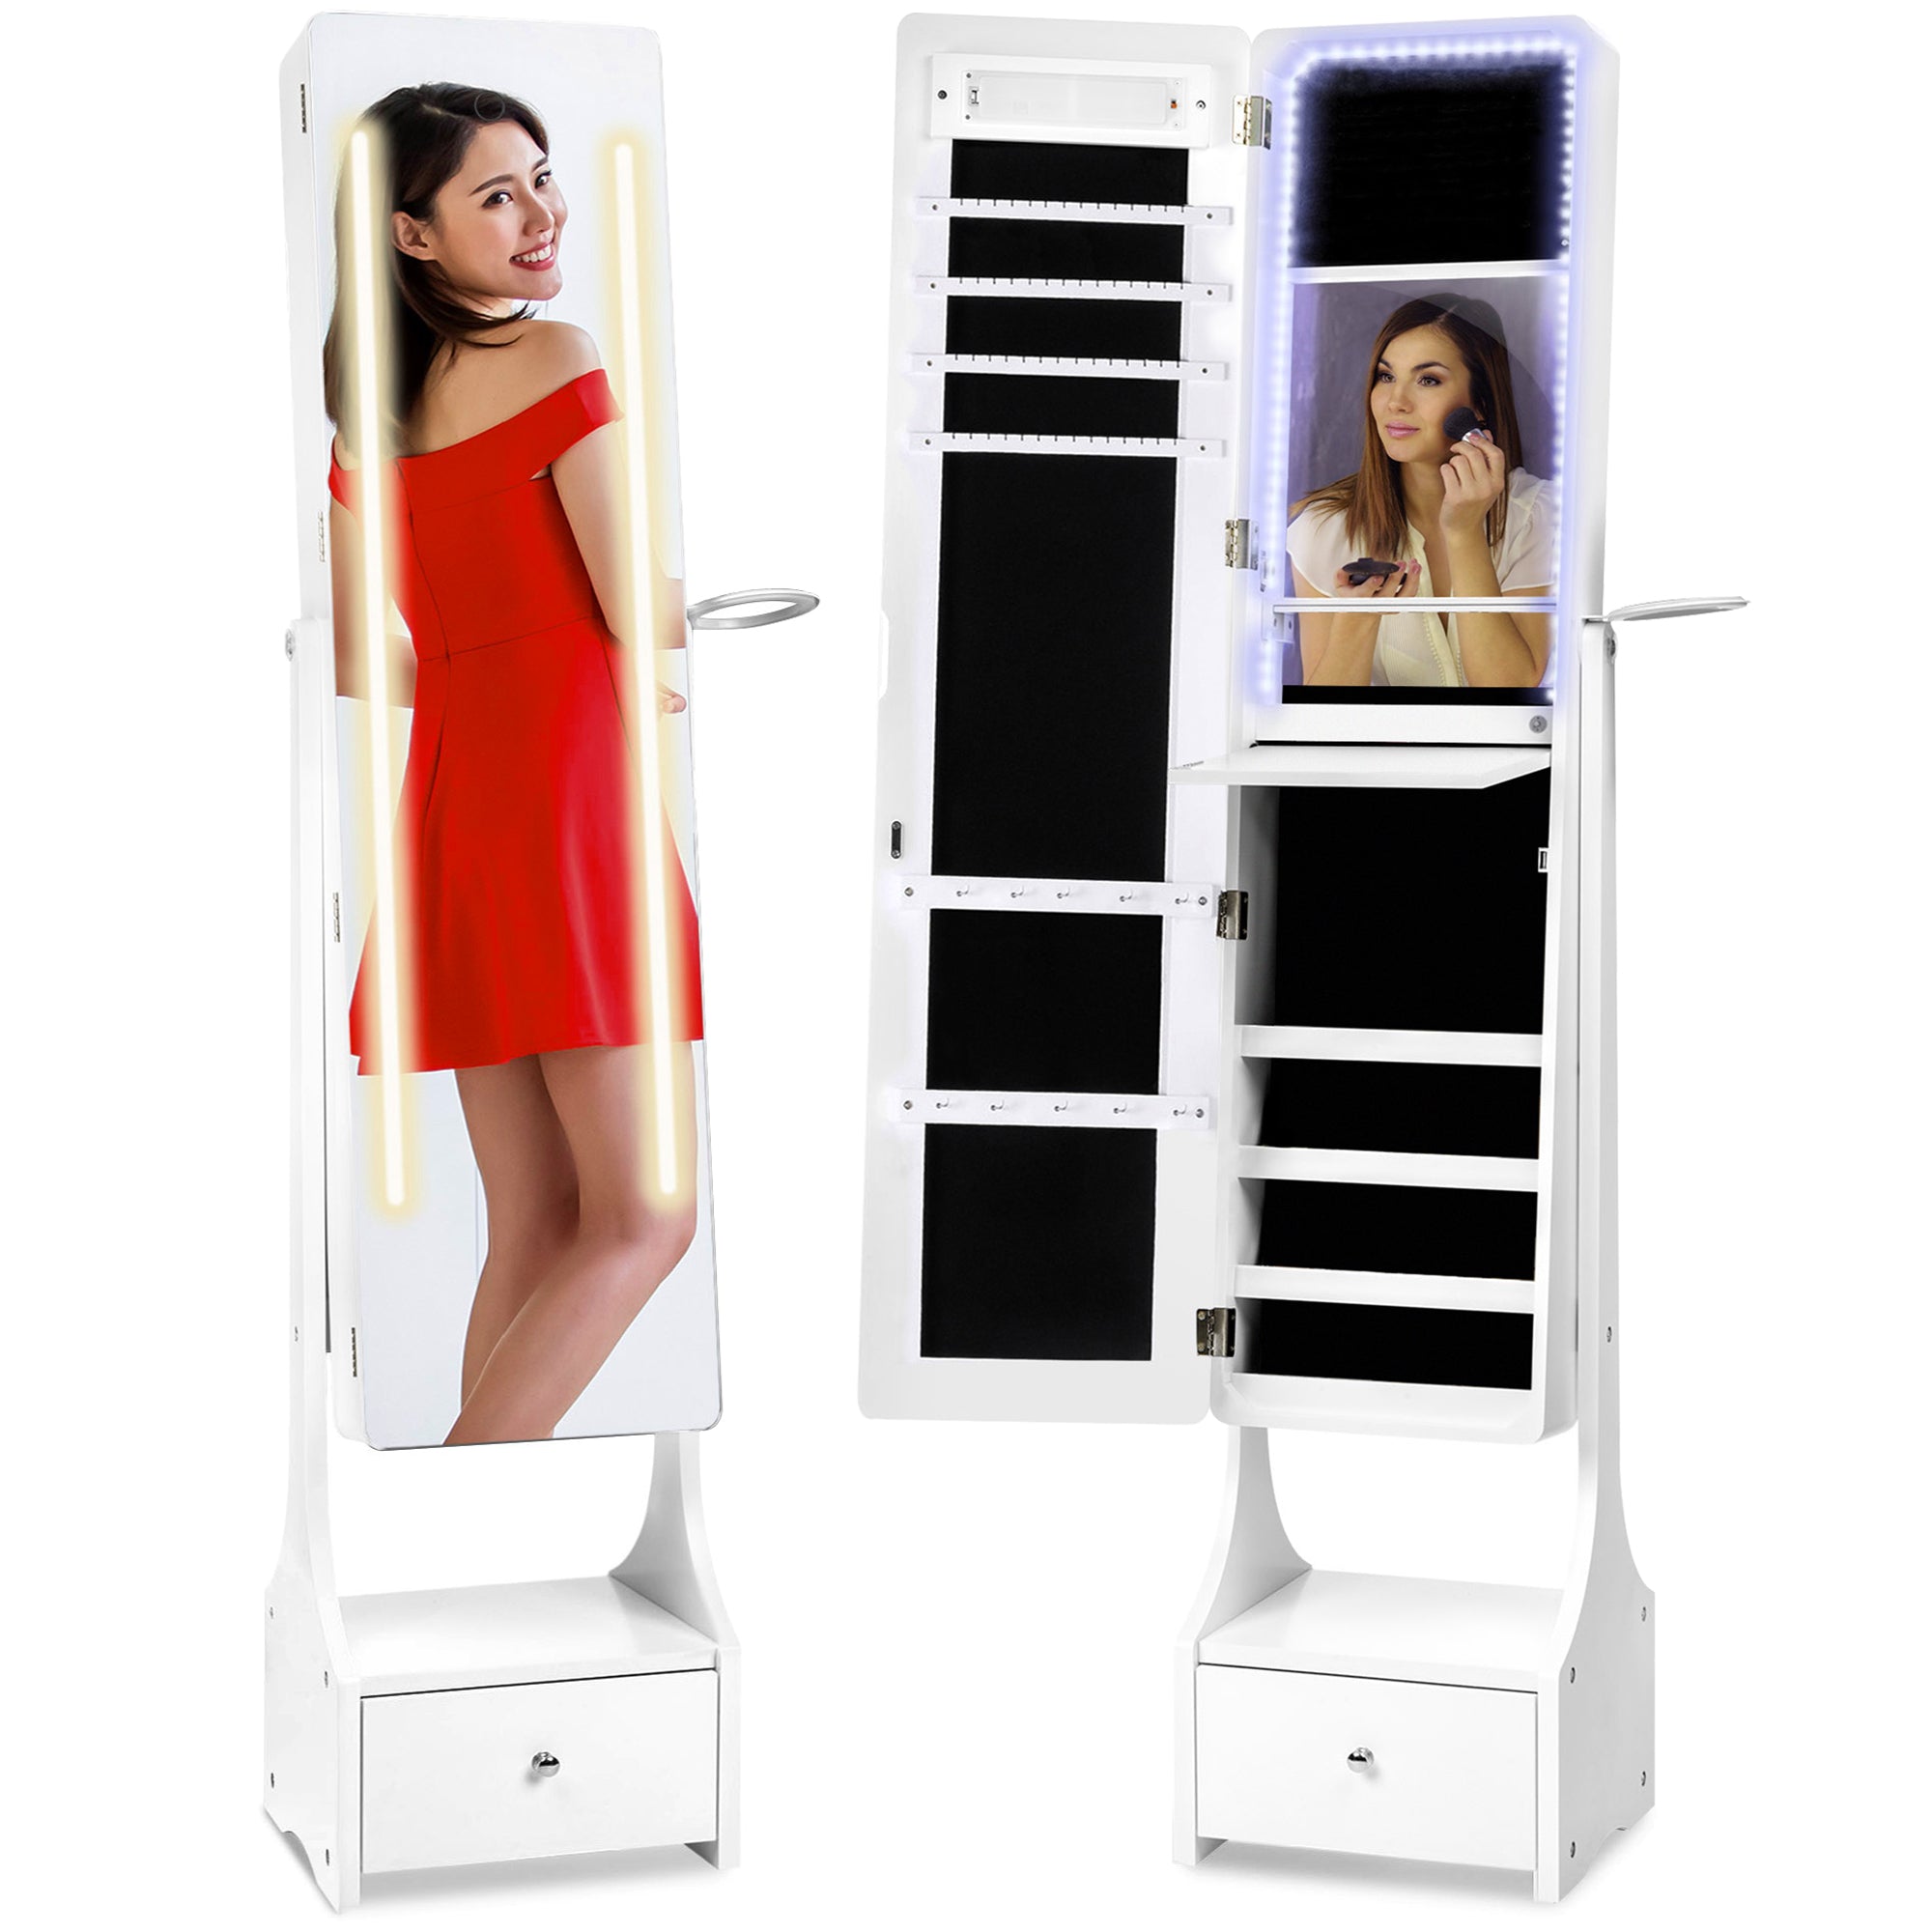 8 Stylish Storage Mirrors We Love - Best Mirrors With Storage